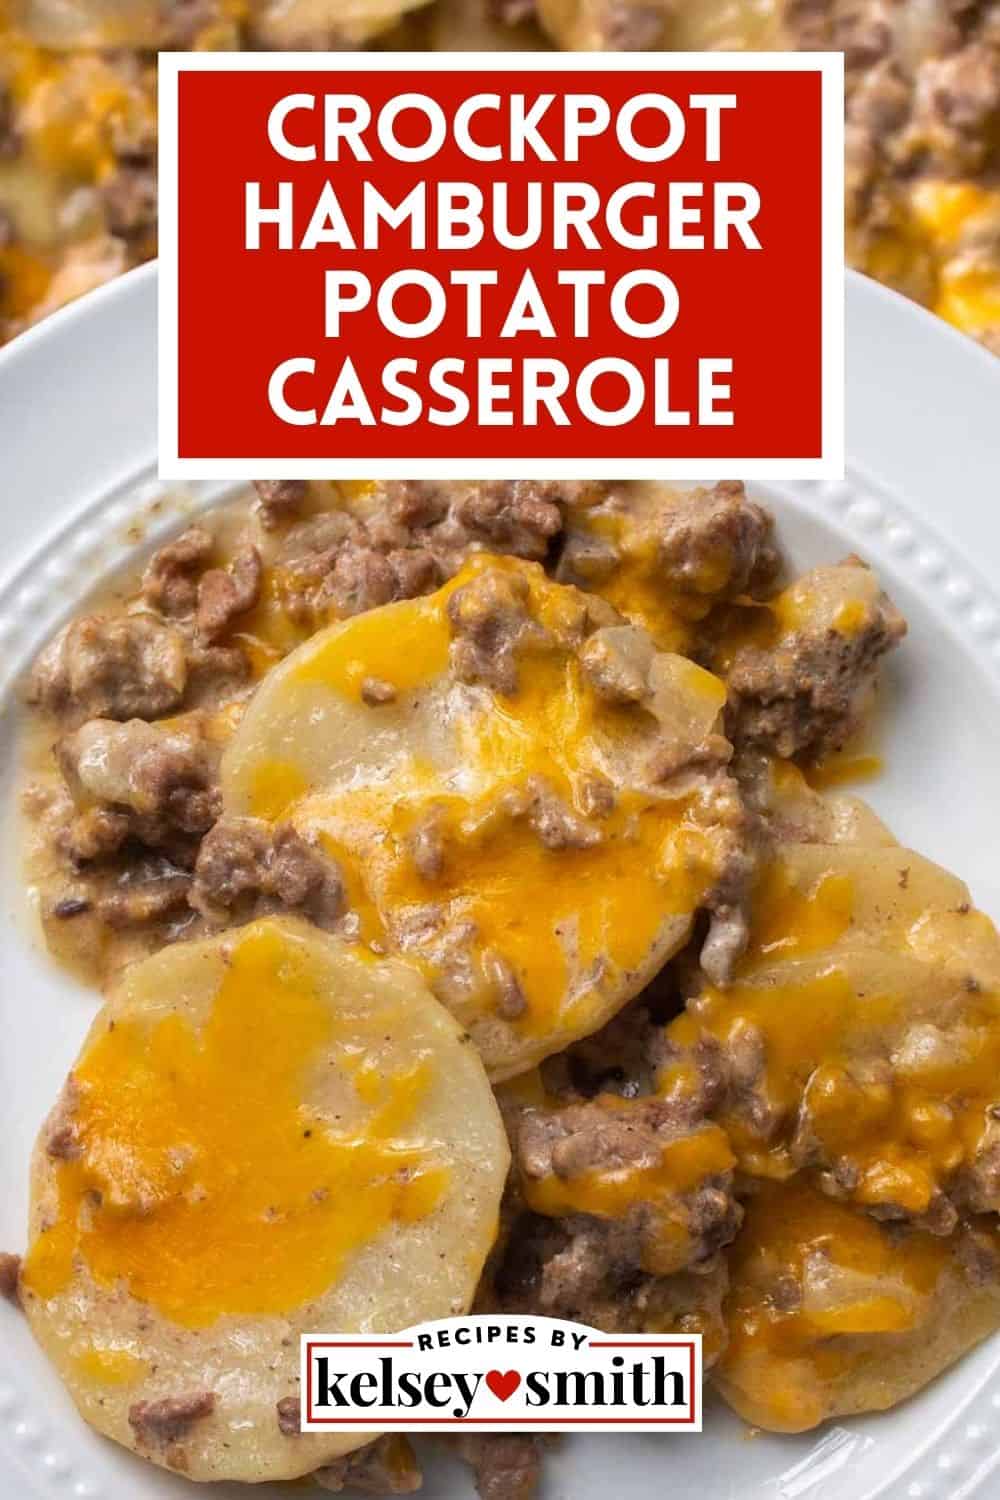 Crockpot Hamburger Potato Casserole Recipe - By Kelsey Smith